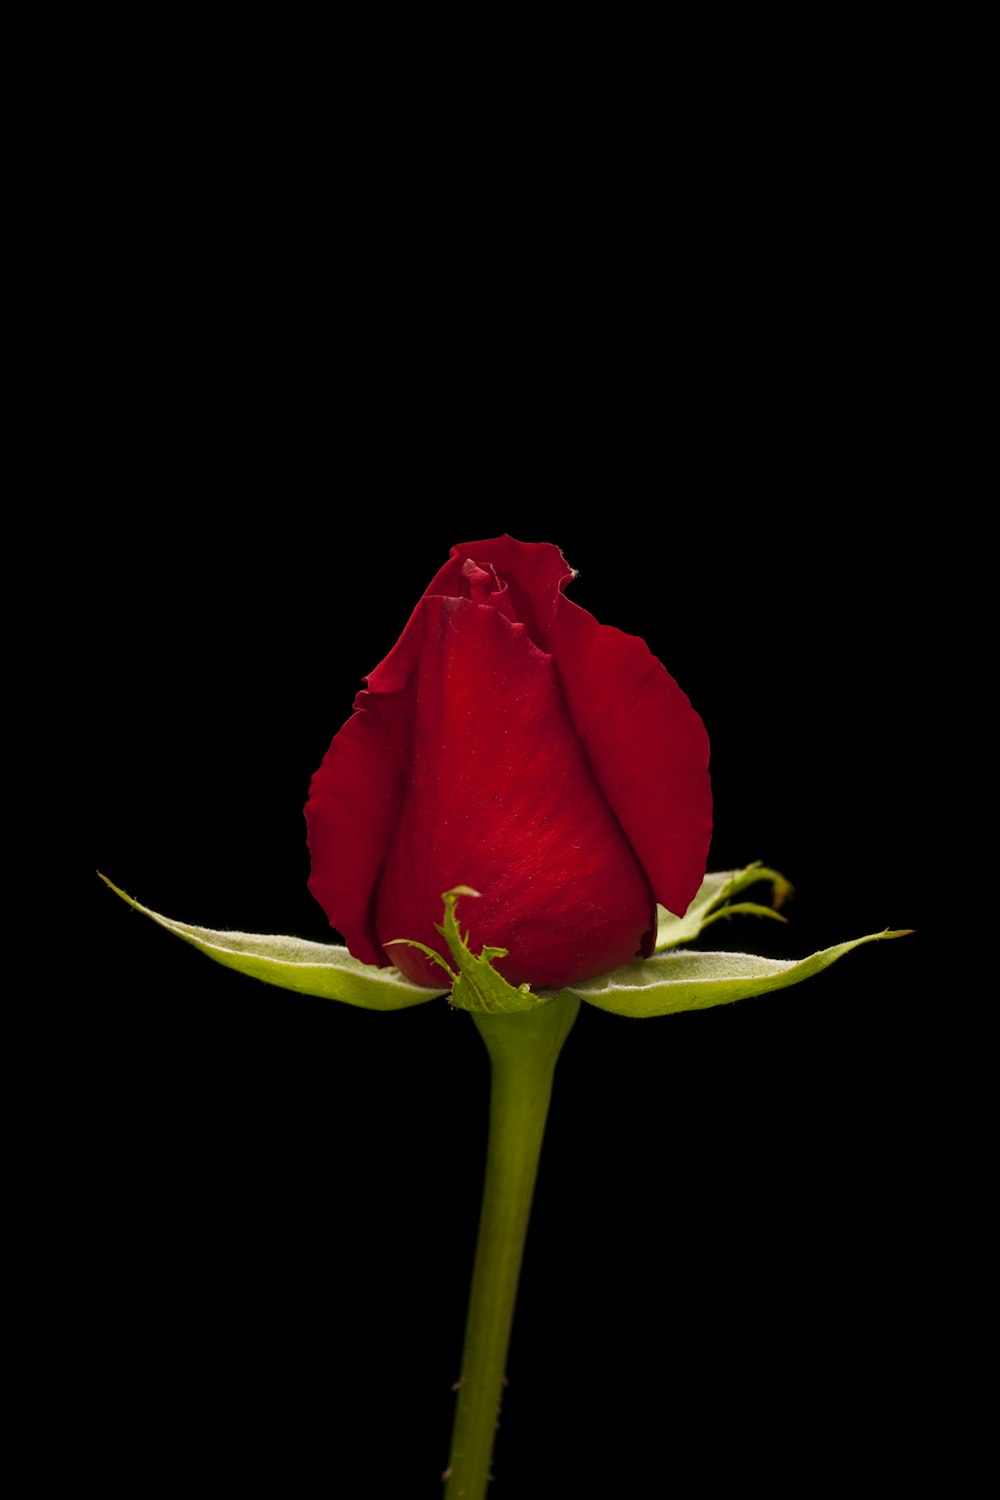 Red Rose In Black Background Photo Free Turkey Image On Unsplash